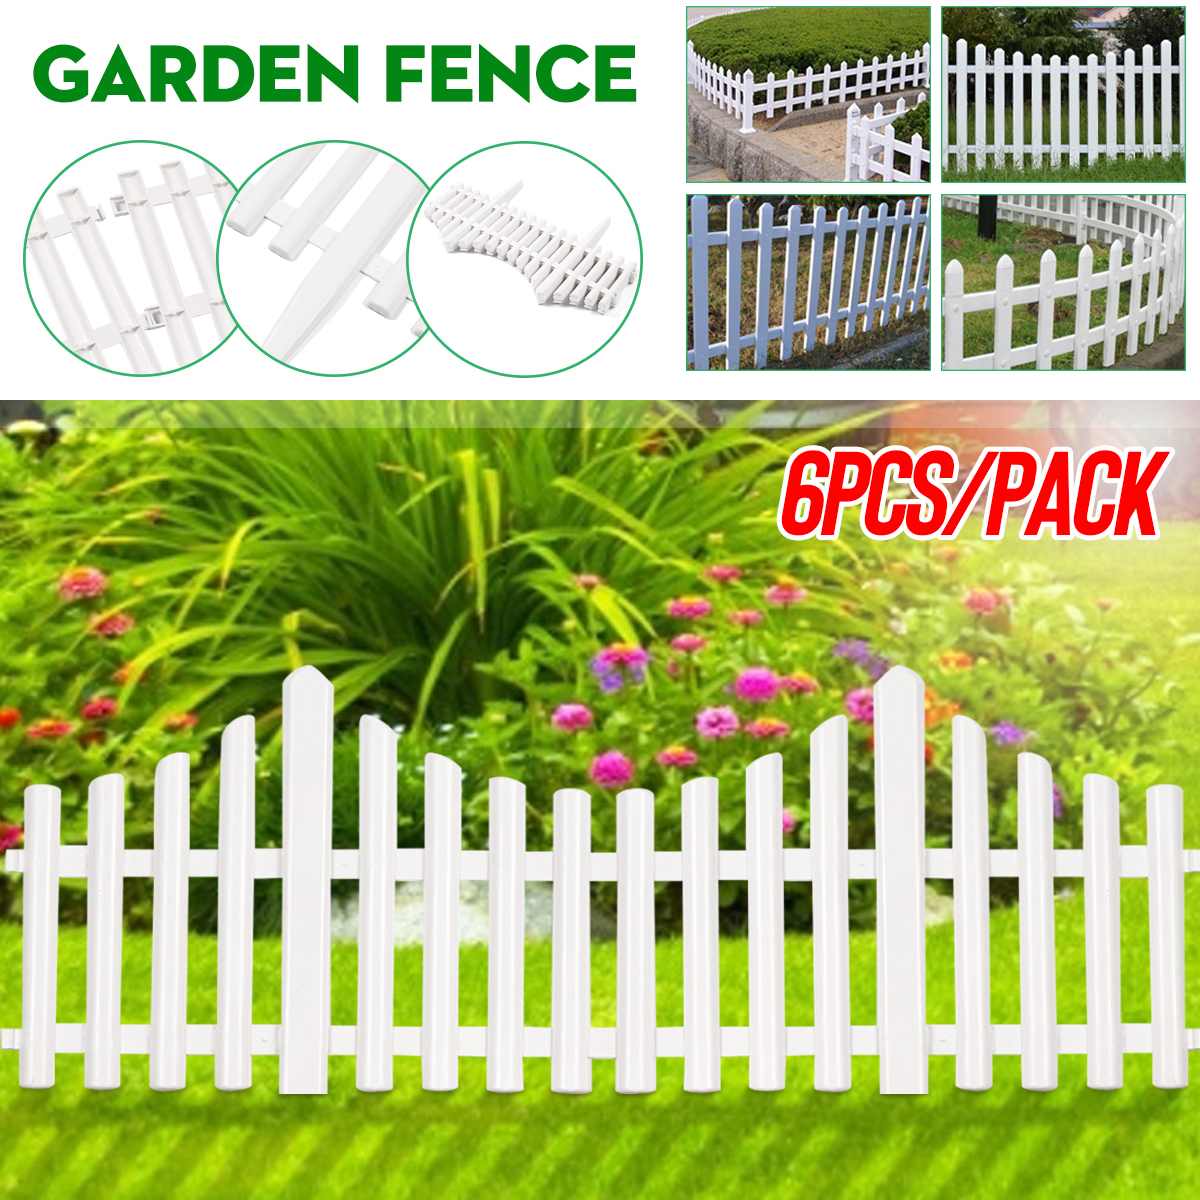 6Pcs 61cm PVC Plastic Garden Fence Easy Assemble White Ground Type Plastic Fences Courtyard Garden Vegetable Fence Decoration